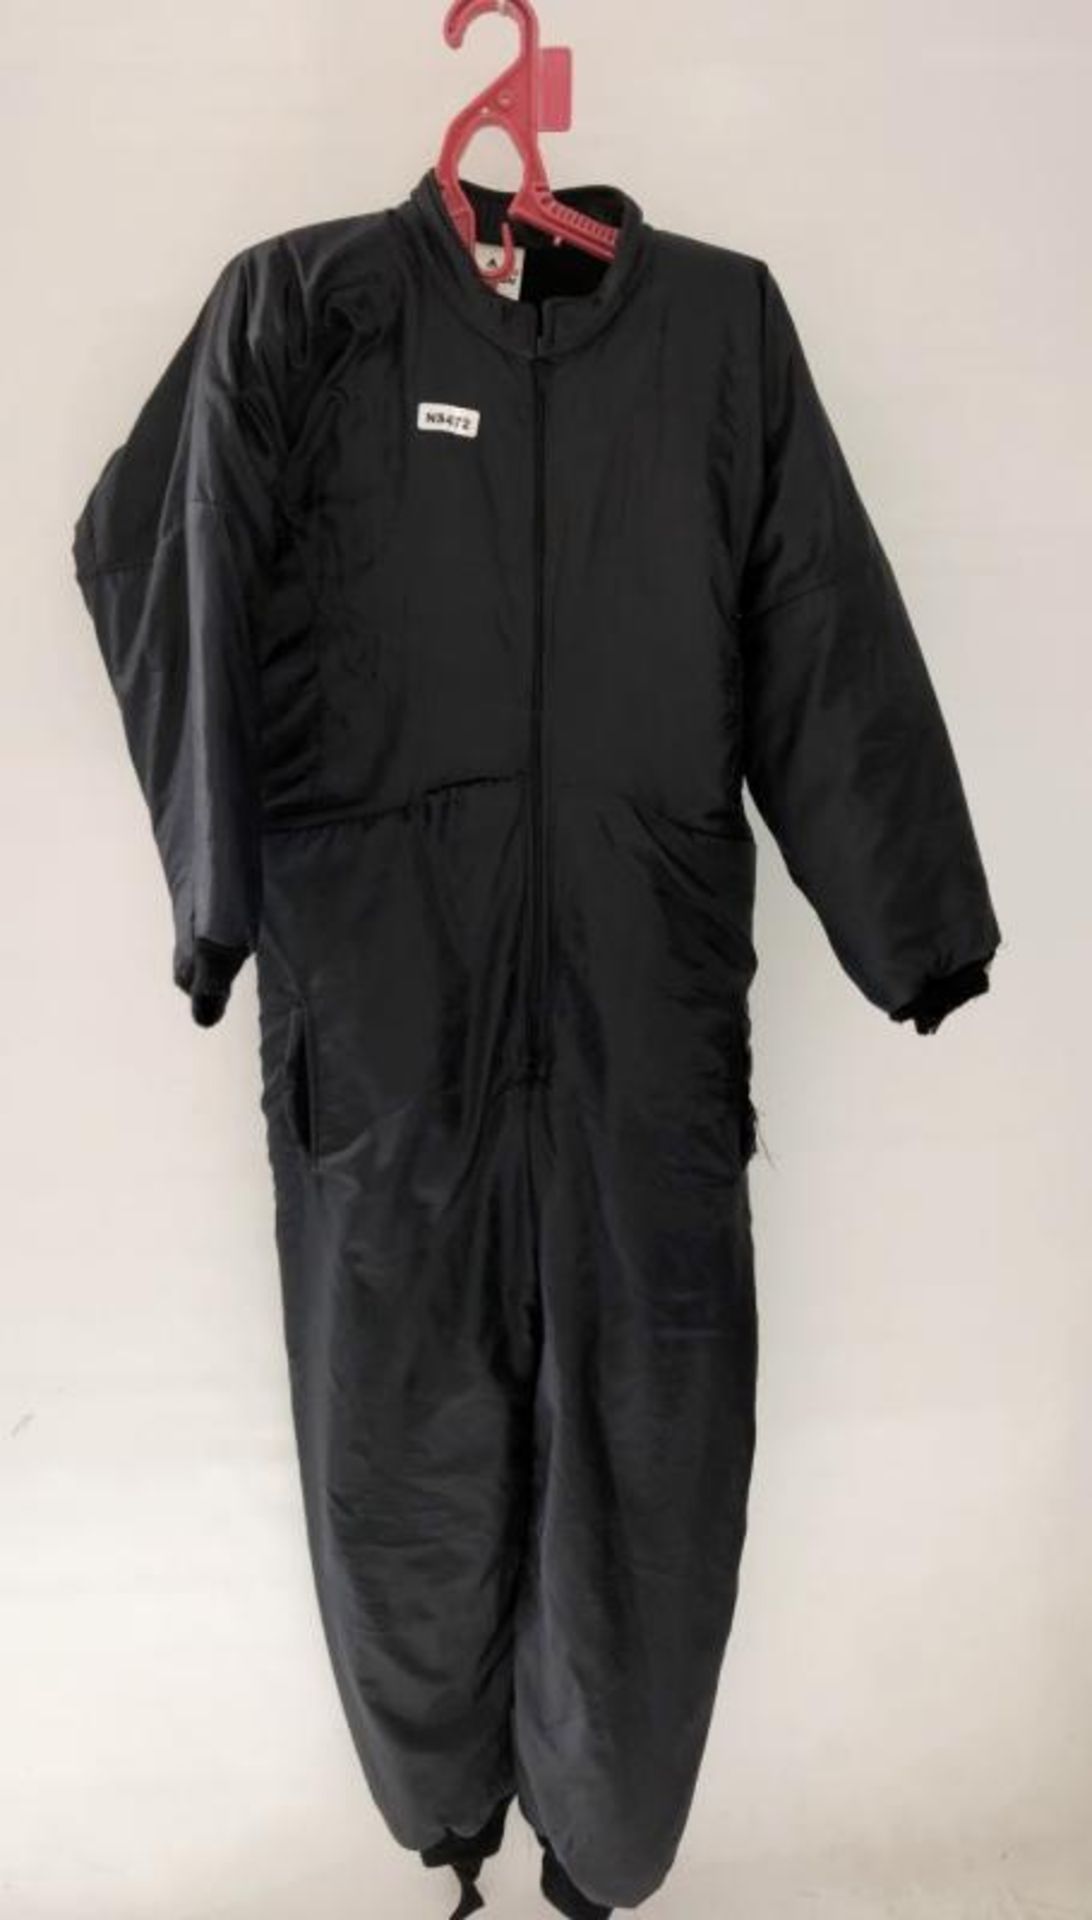 1 x Adults Small Black Typhoon Wetsuit - Ref: NS472 - CL349 - Location: Altrincham WA14